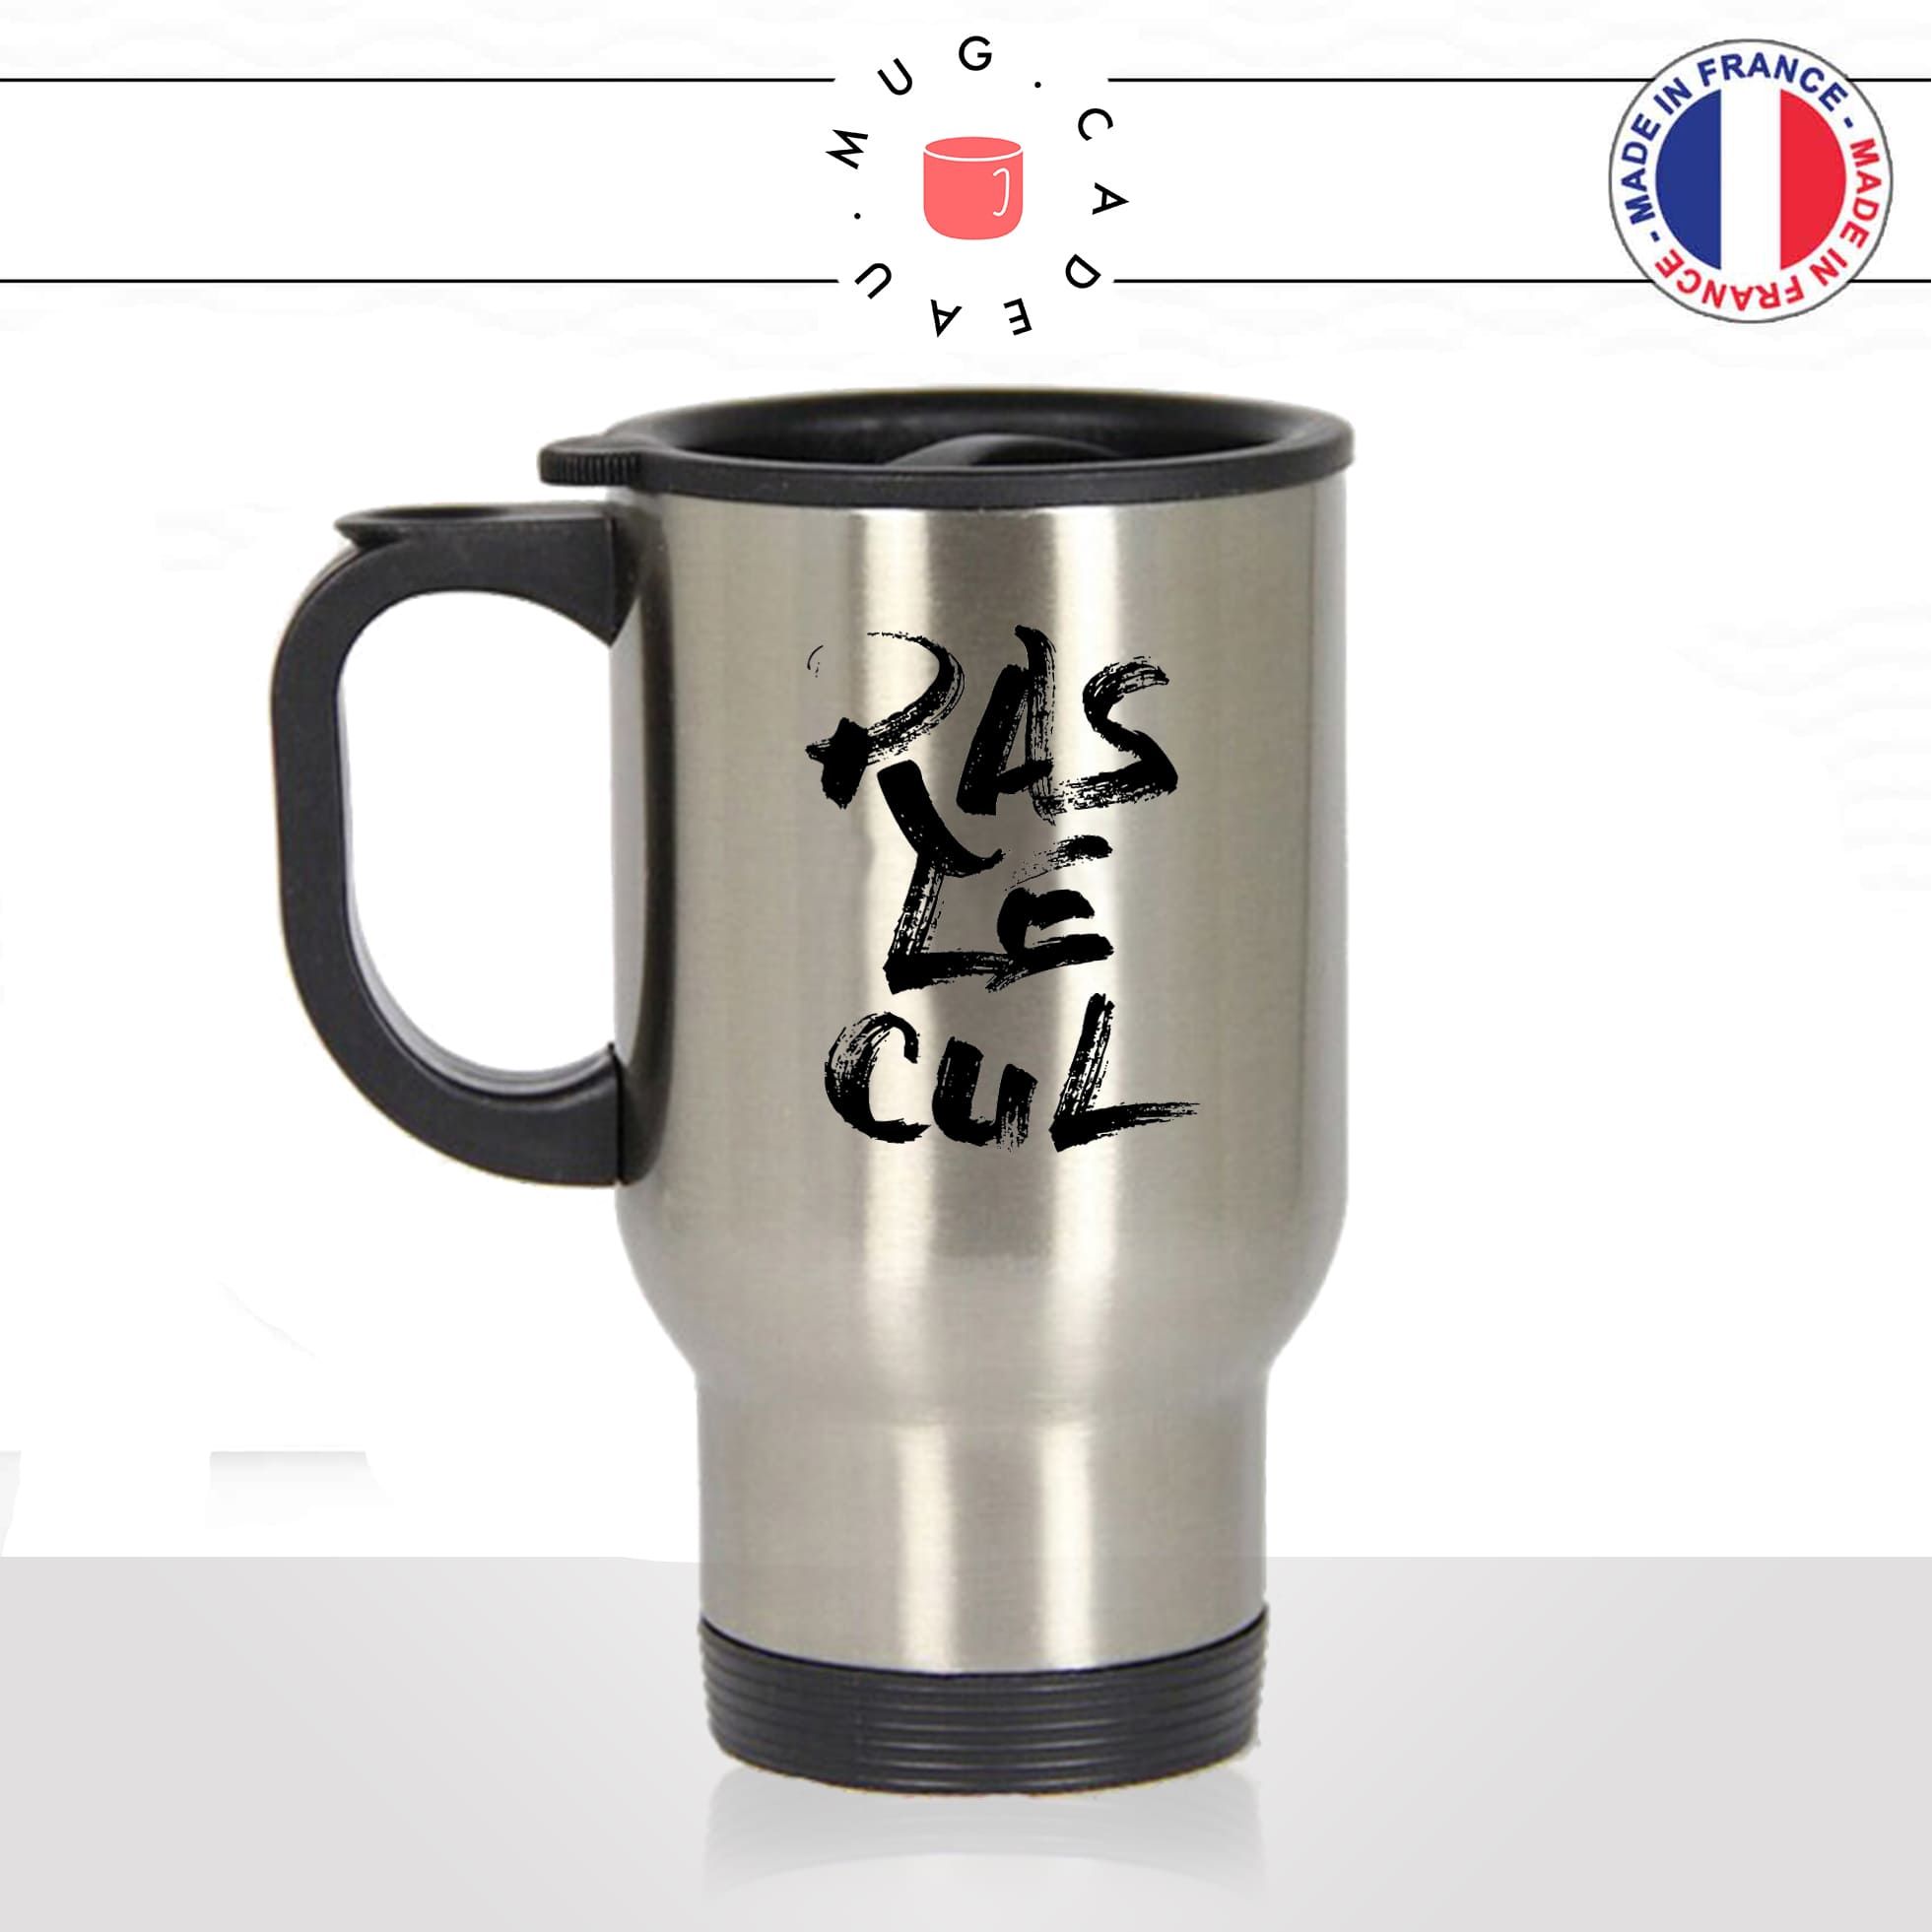 mug-tasse-thermos-isotherme-voyage-ras-le-cul-jen-ai-marre-expression-phrase-fransaice-humour-fun-idée-cadeau-originale-cool